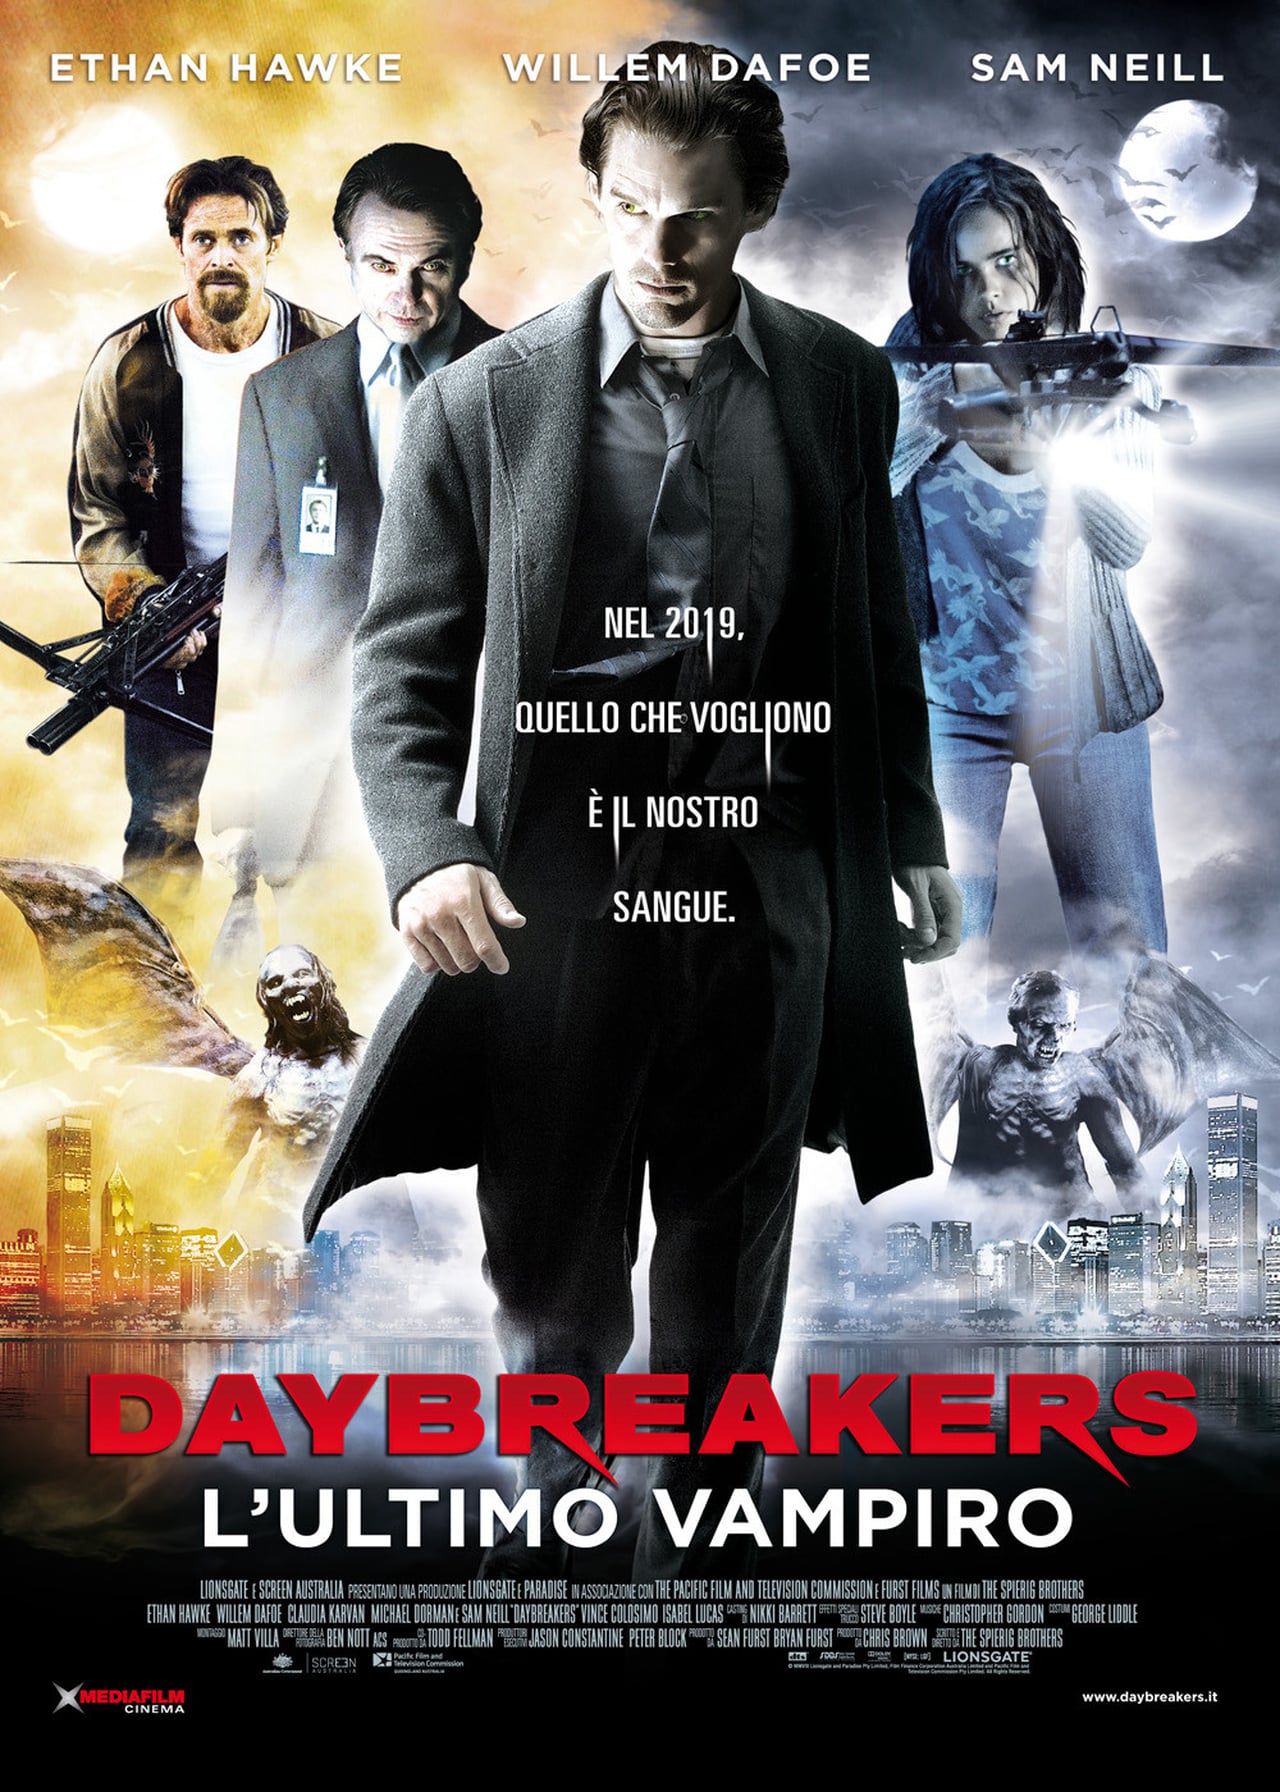 Daybreakers – L’ultimo vampiro [HD] (2010)